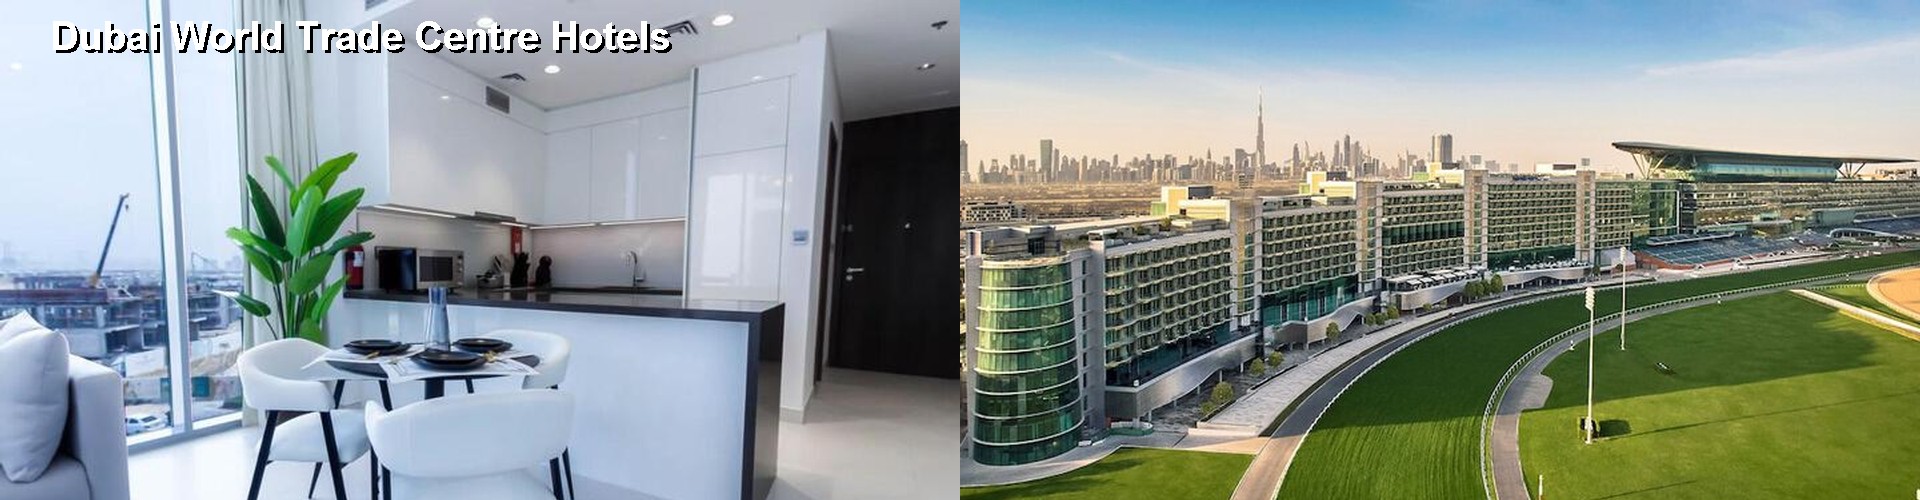 5 Best Hotels near Dubai World Trade Centre